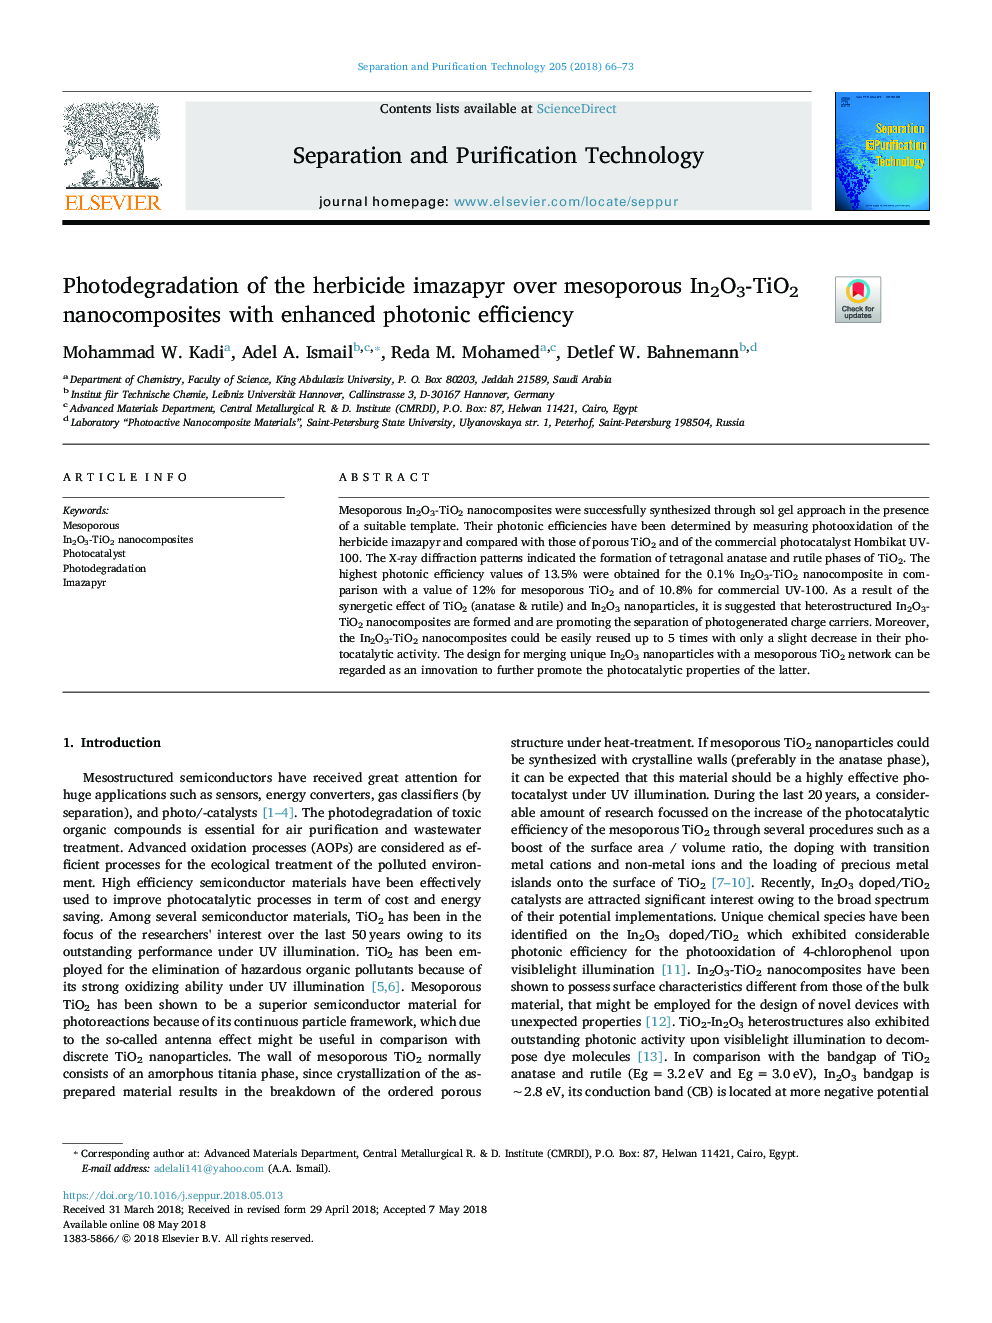 Photodegradation of the herbicide imazapyr over mesoporous In2O3-TiO2 nanocomposites with enhanced photonic efficiency